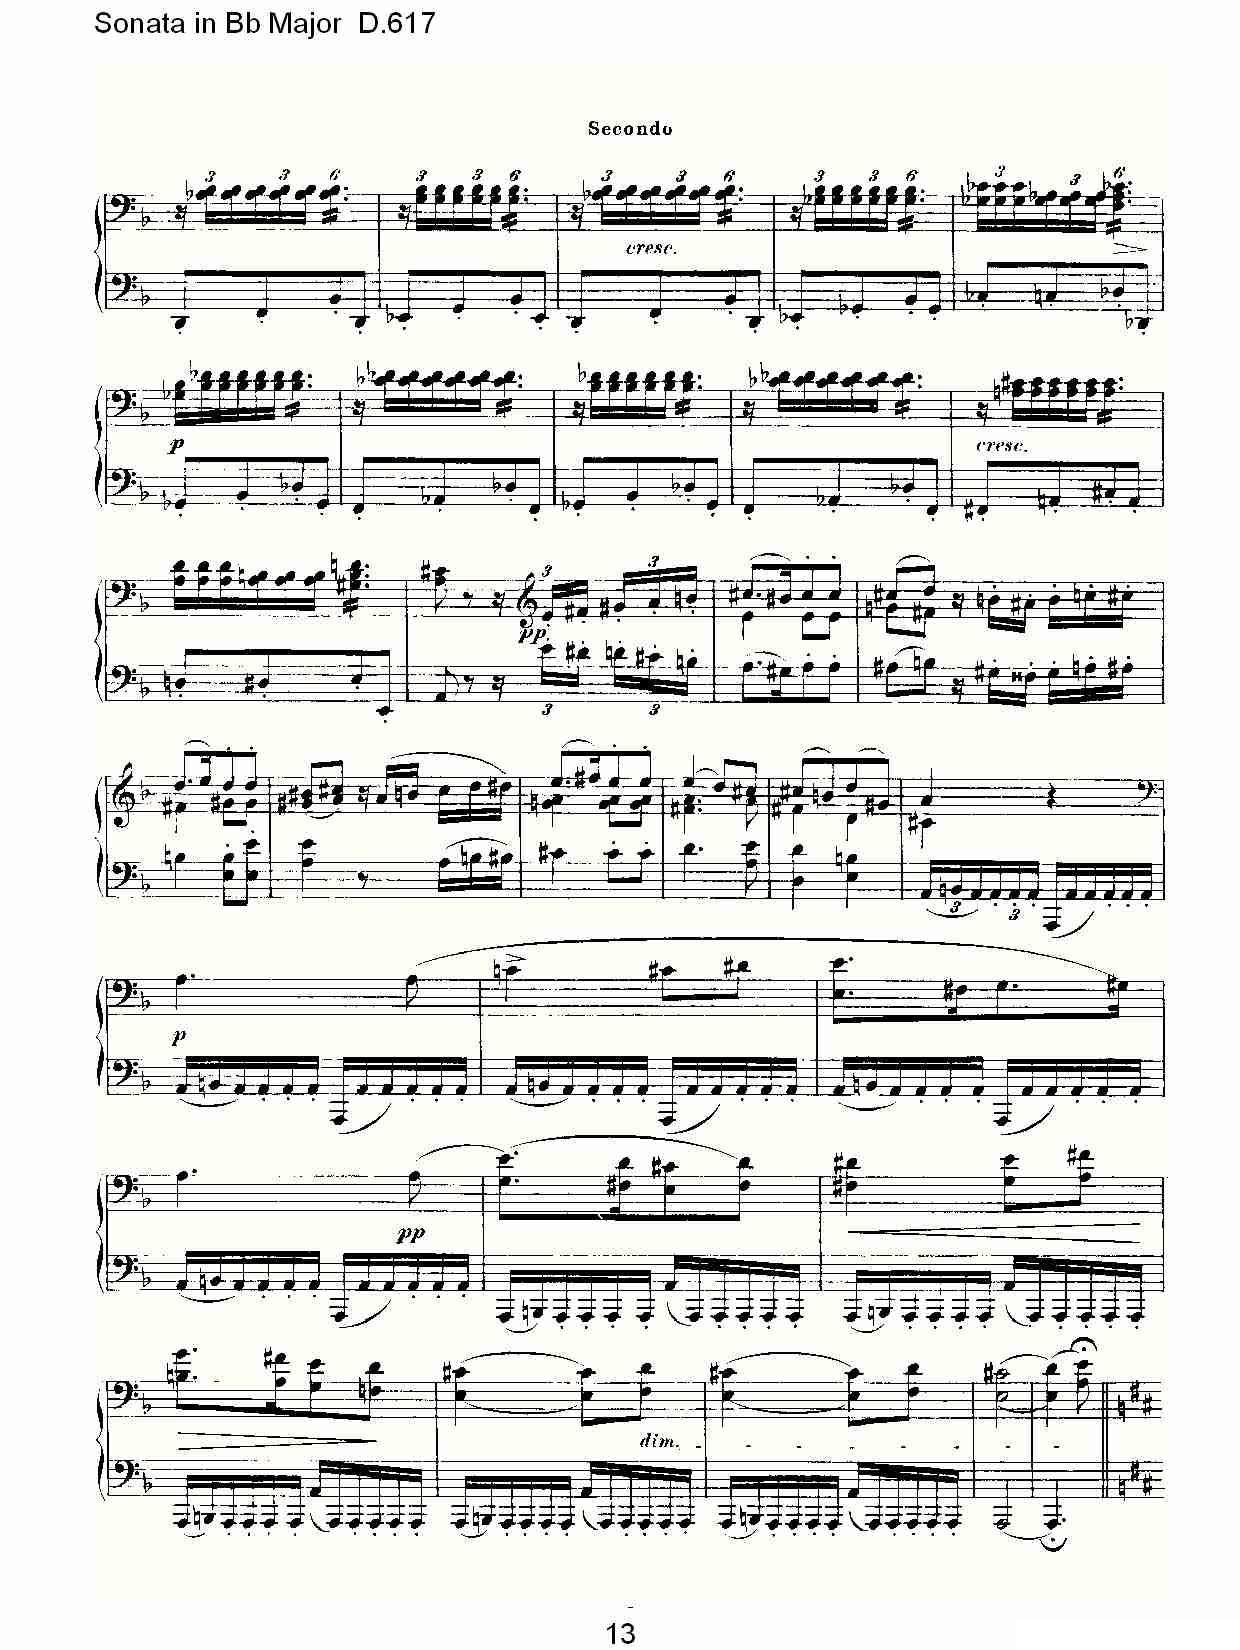 Sonata in Bb Major D.617（Bb大调奏鸣曲 D.617）钢琴曲谱（图13）